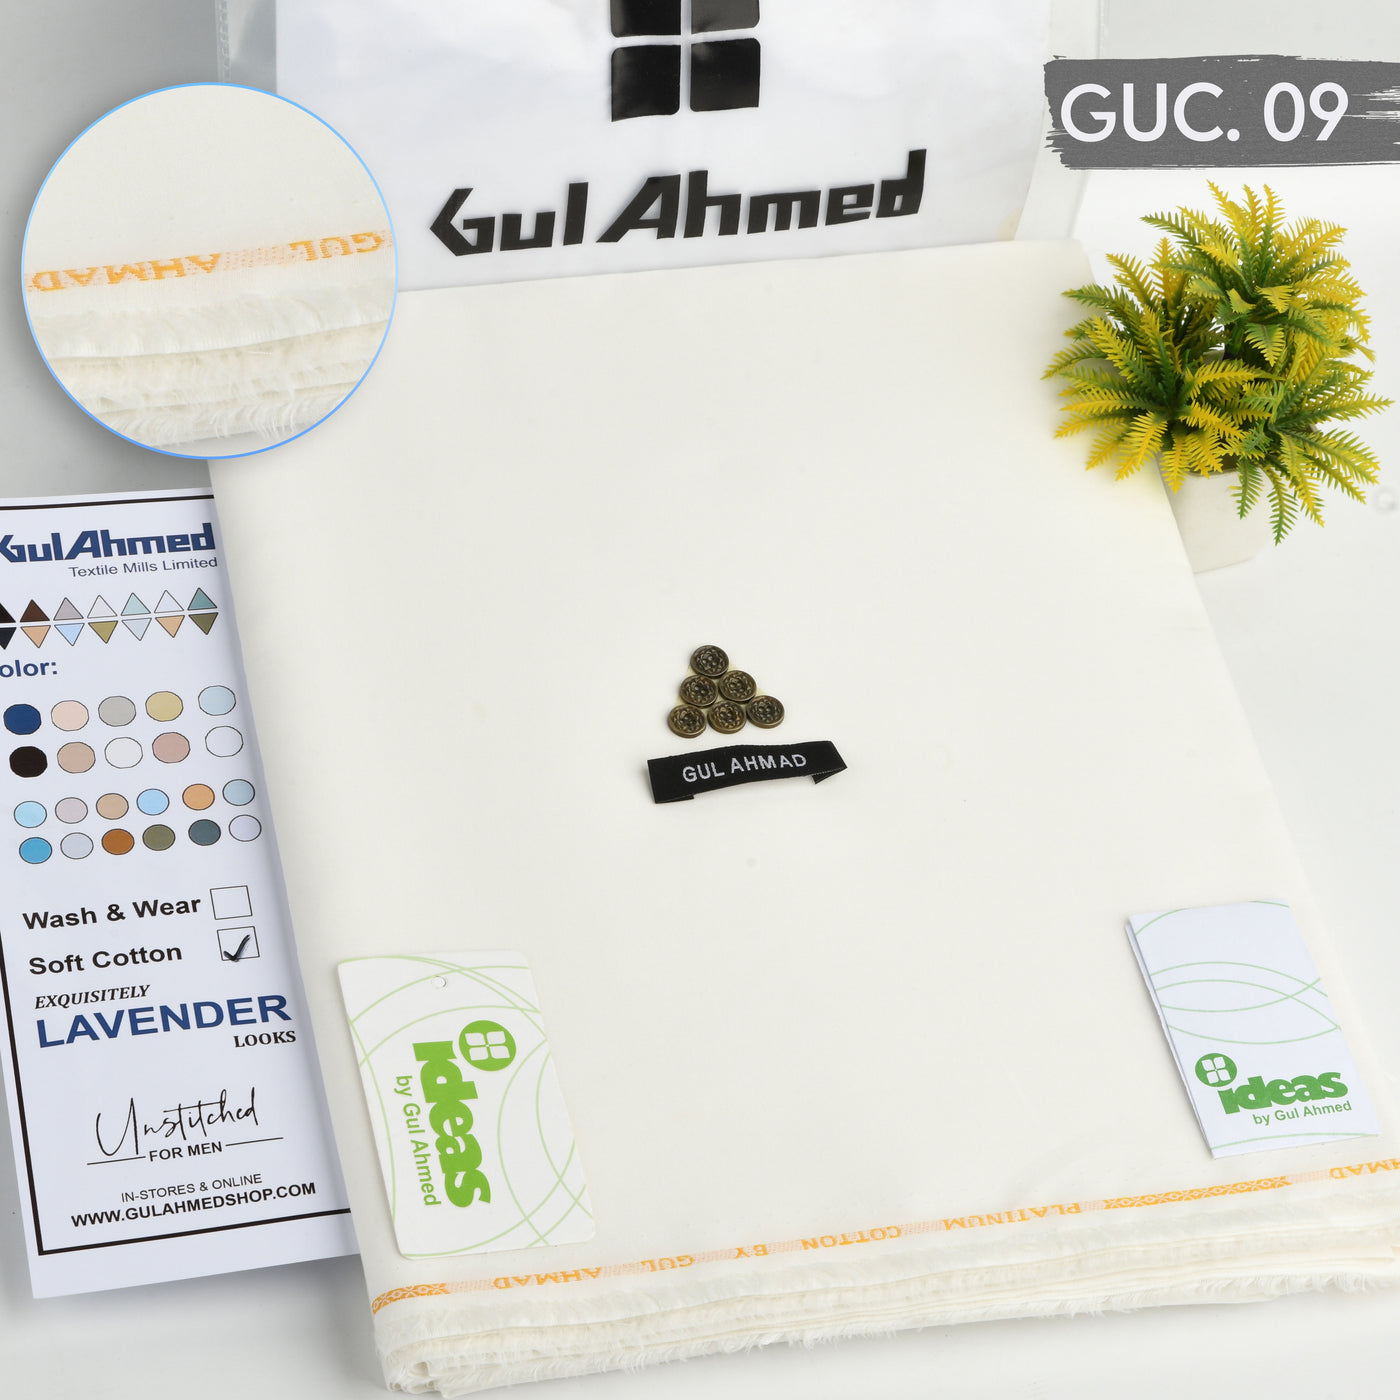 Gul Ahmed Cotton GUC-09